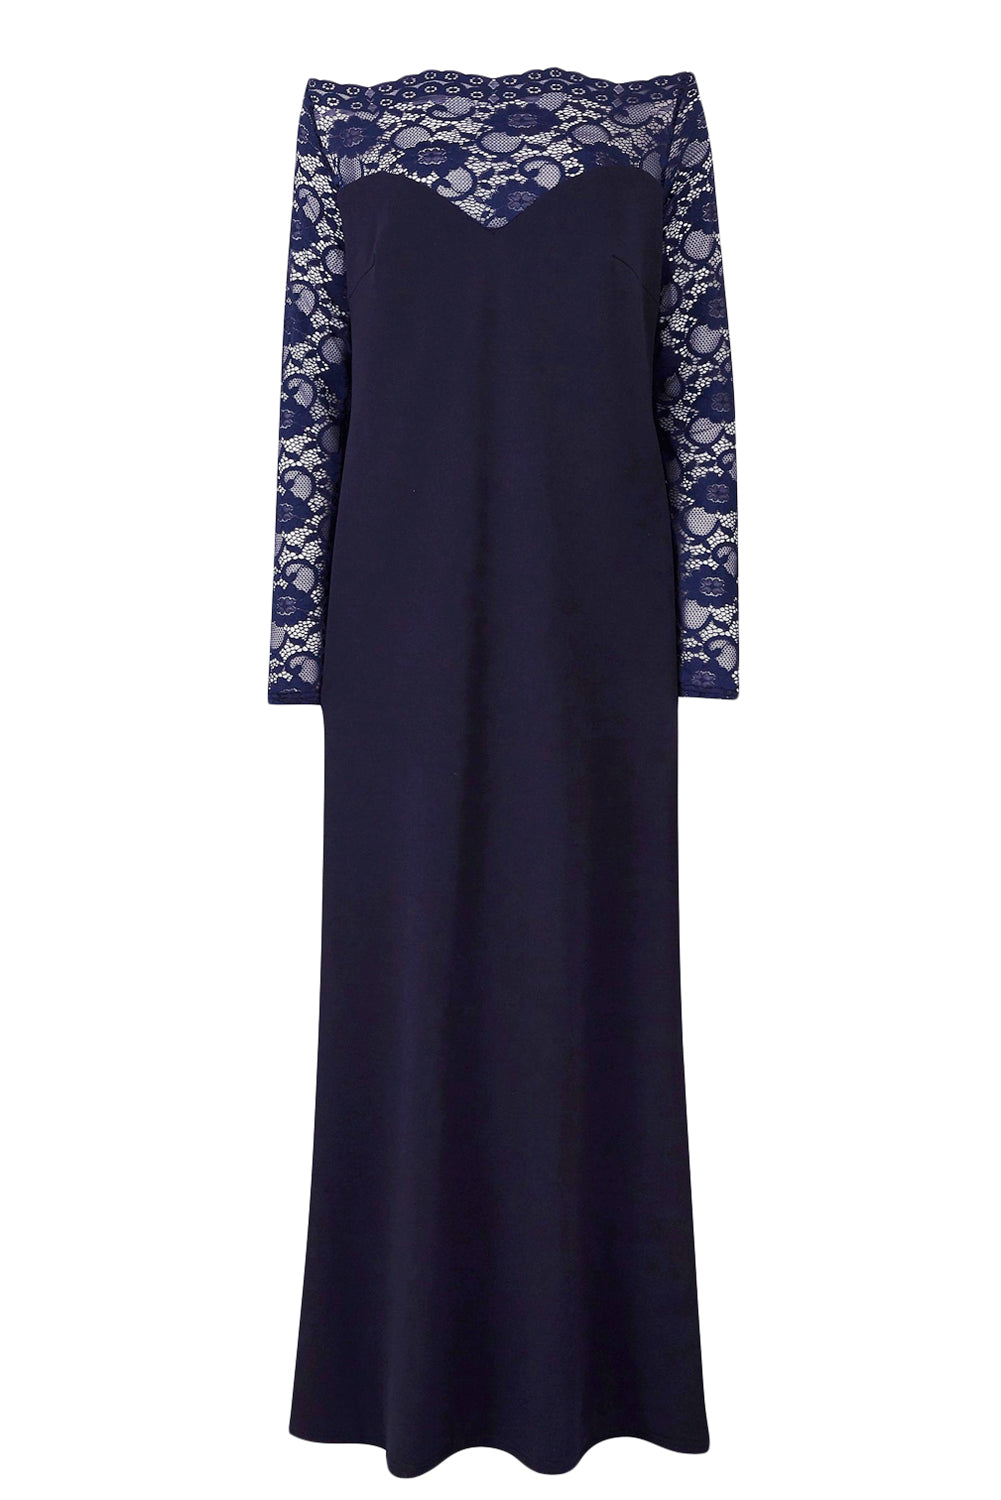 Blue Lace Off-The-Shoulder Maxi Dress